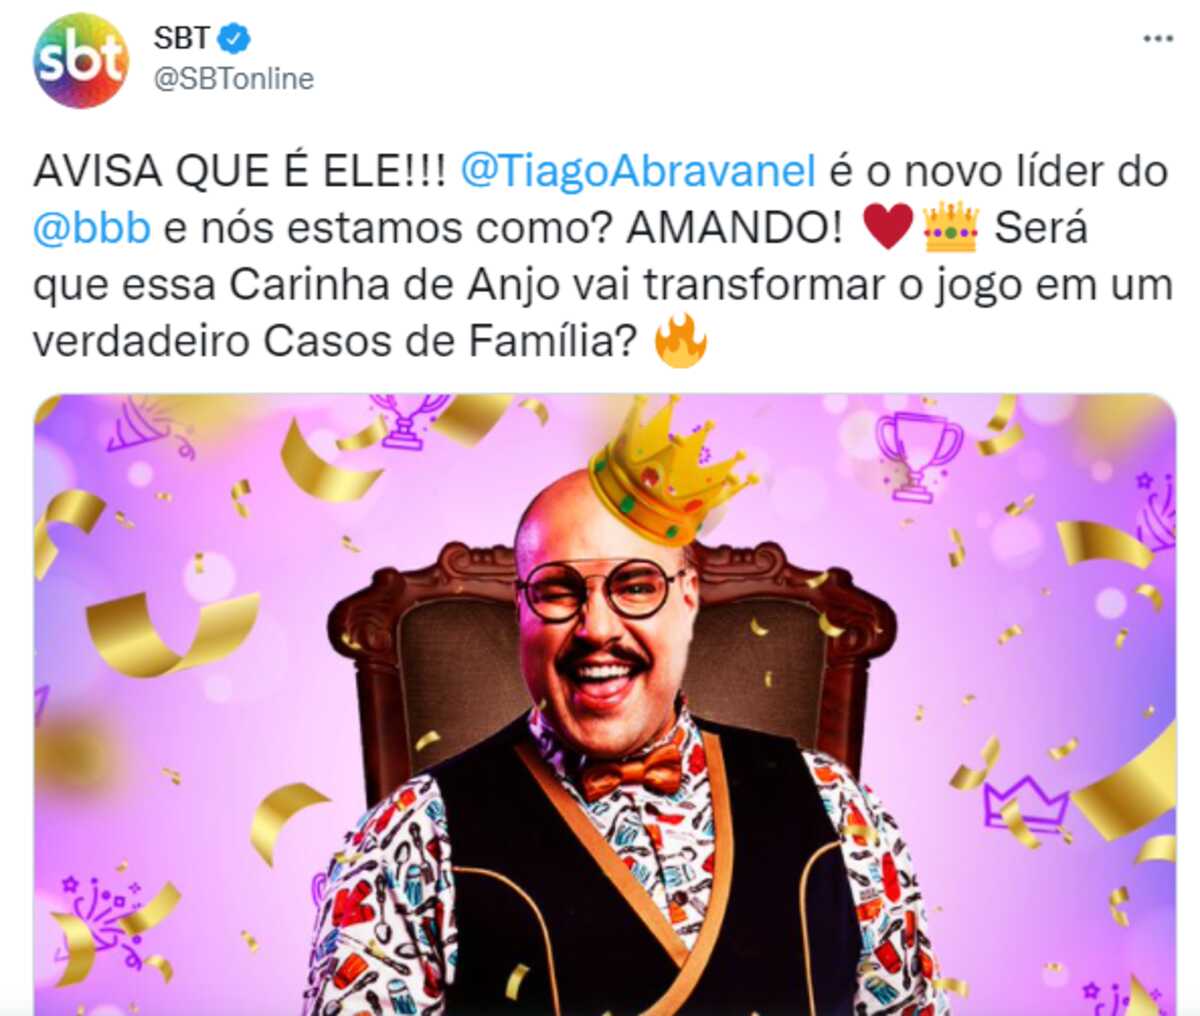 SBT comemora liderança de Tiago Abravanel no BBB e Globo comenta